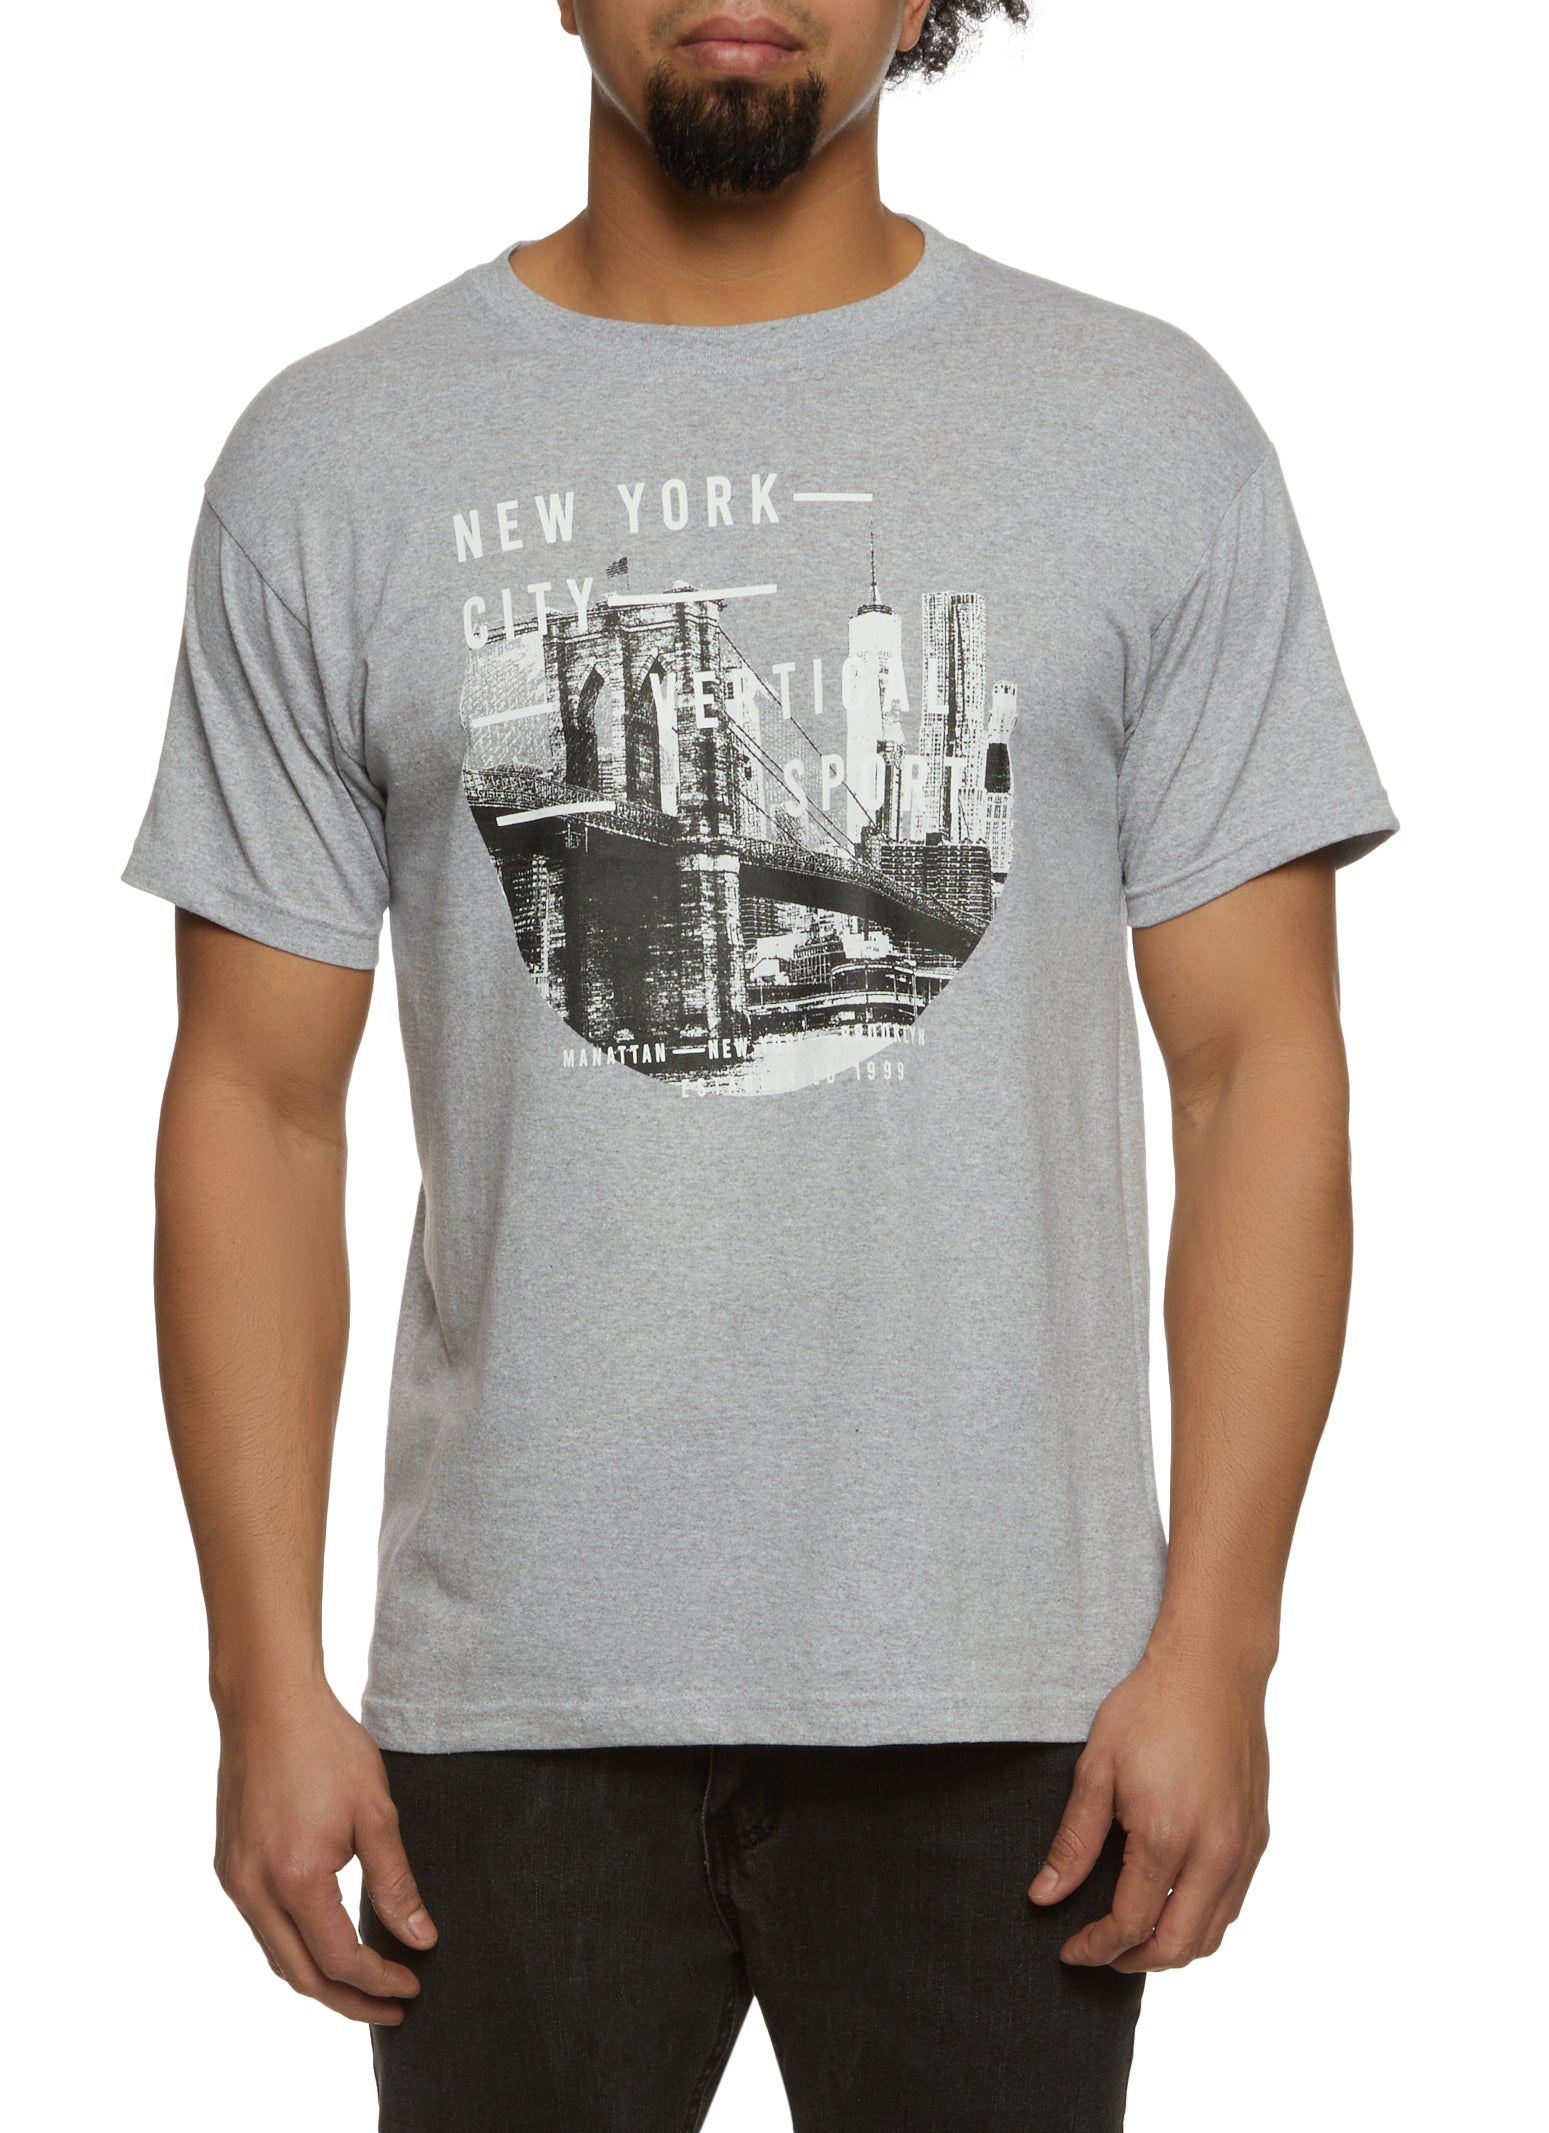 Womens Mens New York City Short Sleeve Crew Neck Graphic T Shirt, Grey, Size XL